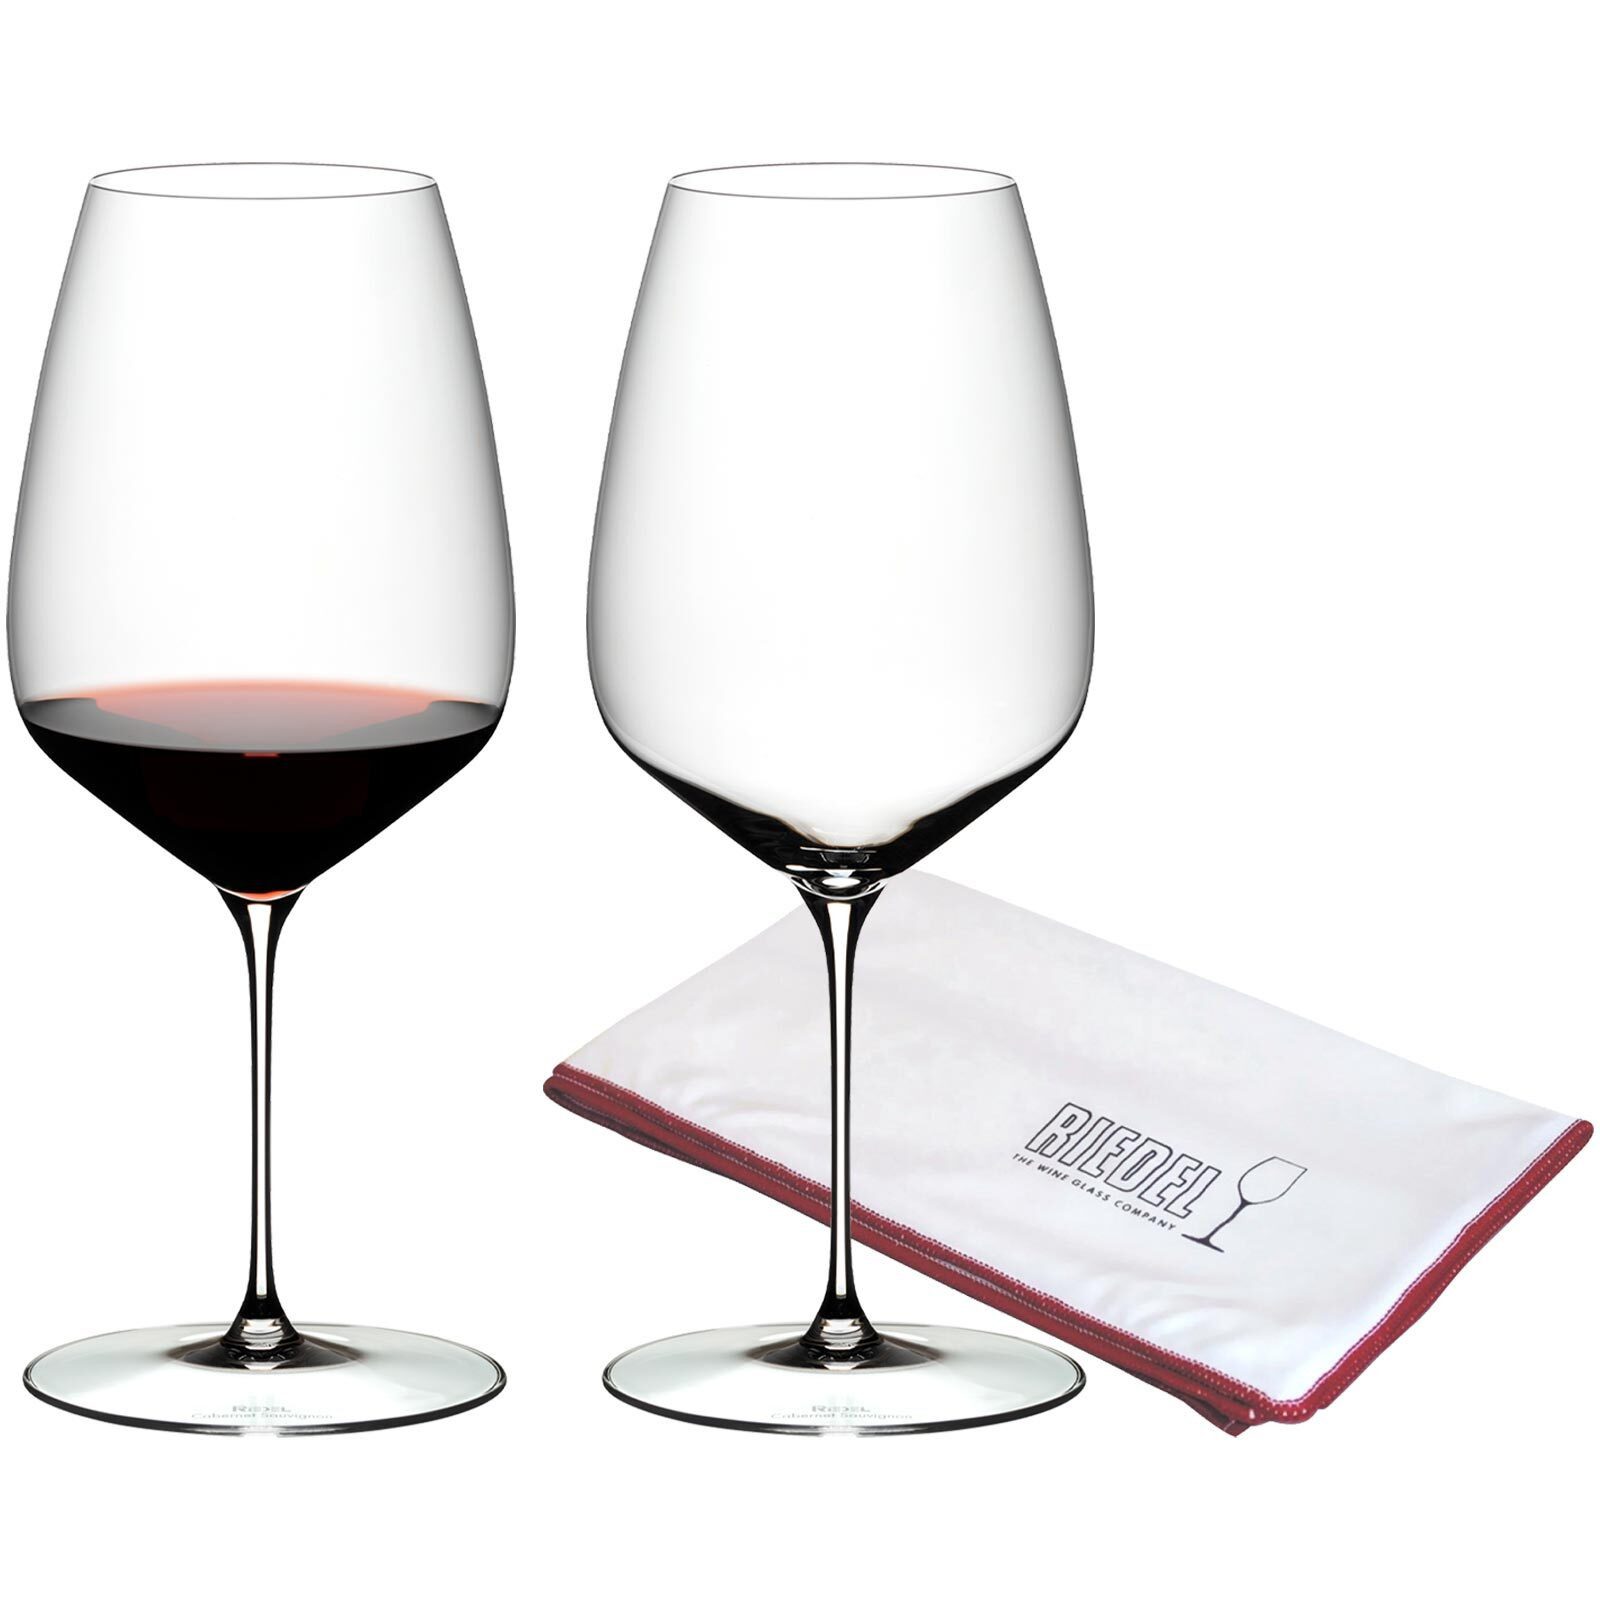 RIEDEL THE WINE GLASS COMPANY Rotweinglas Veloce Cabernet / Merlot Weingläser + Poliertuch, Glas